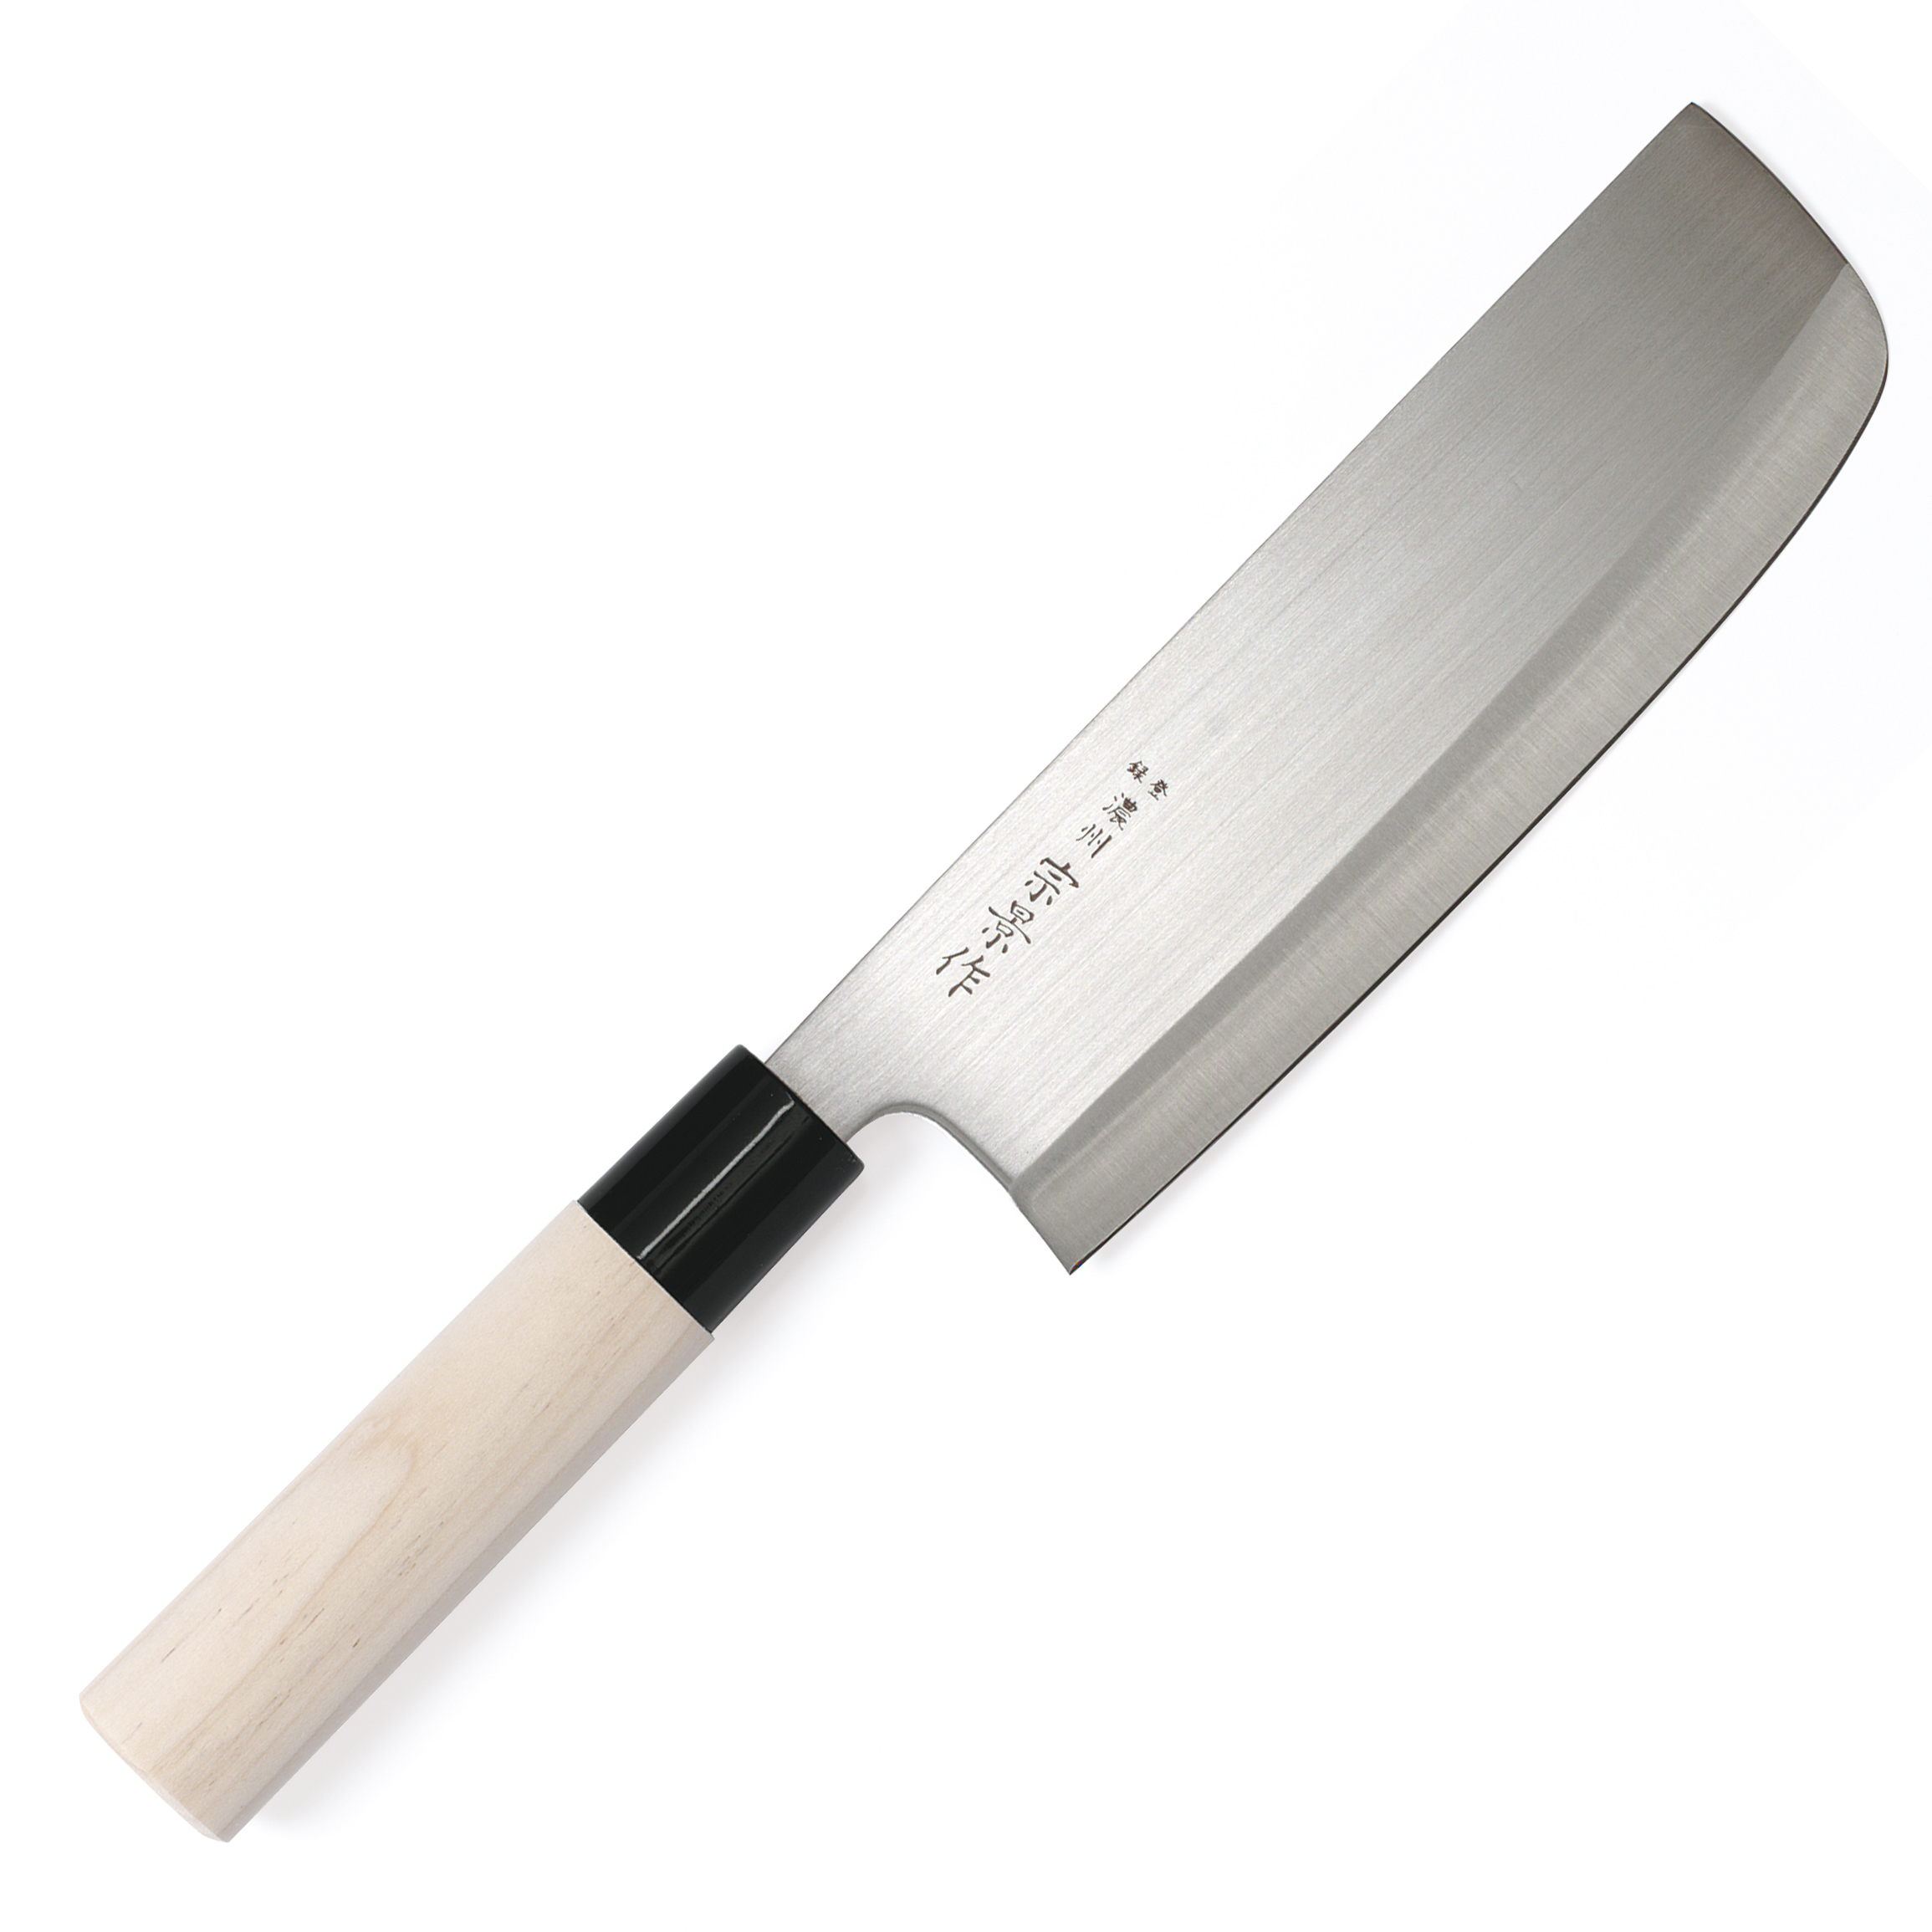 Couteau japonais à légumes nakiri Haiku Home HH05